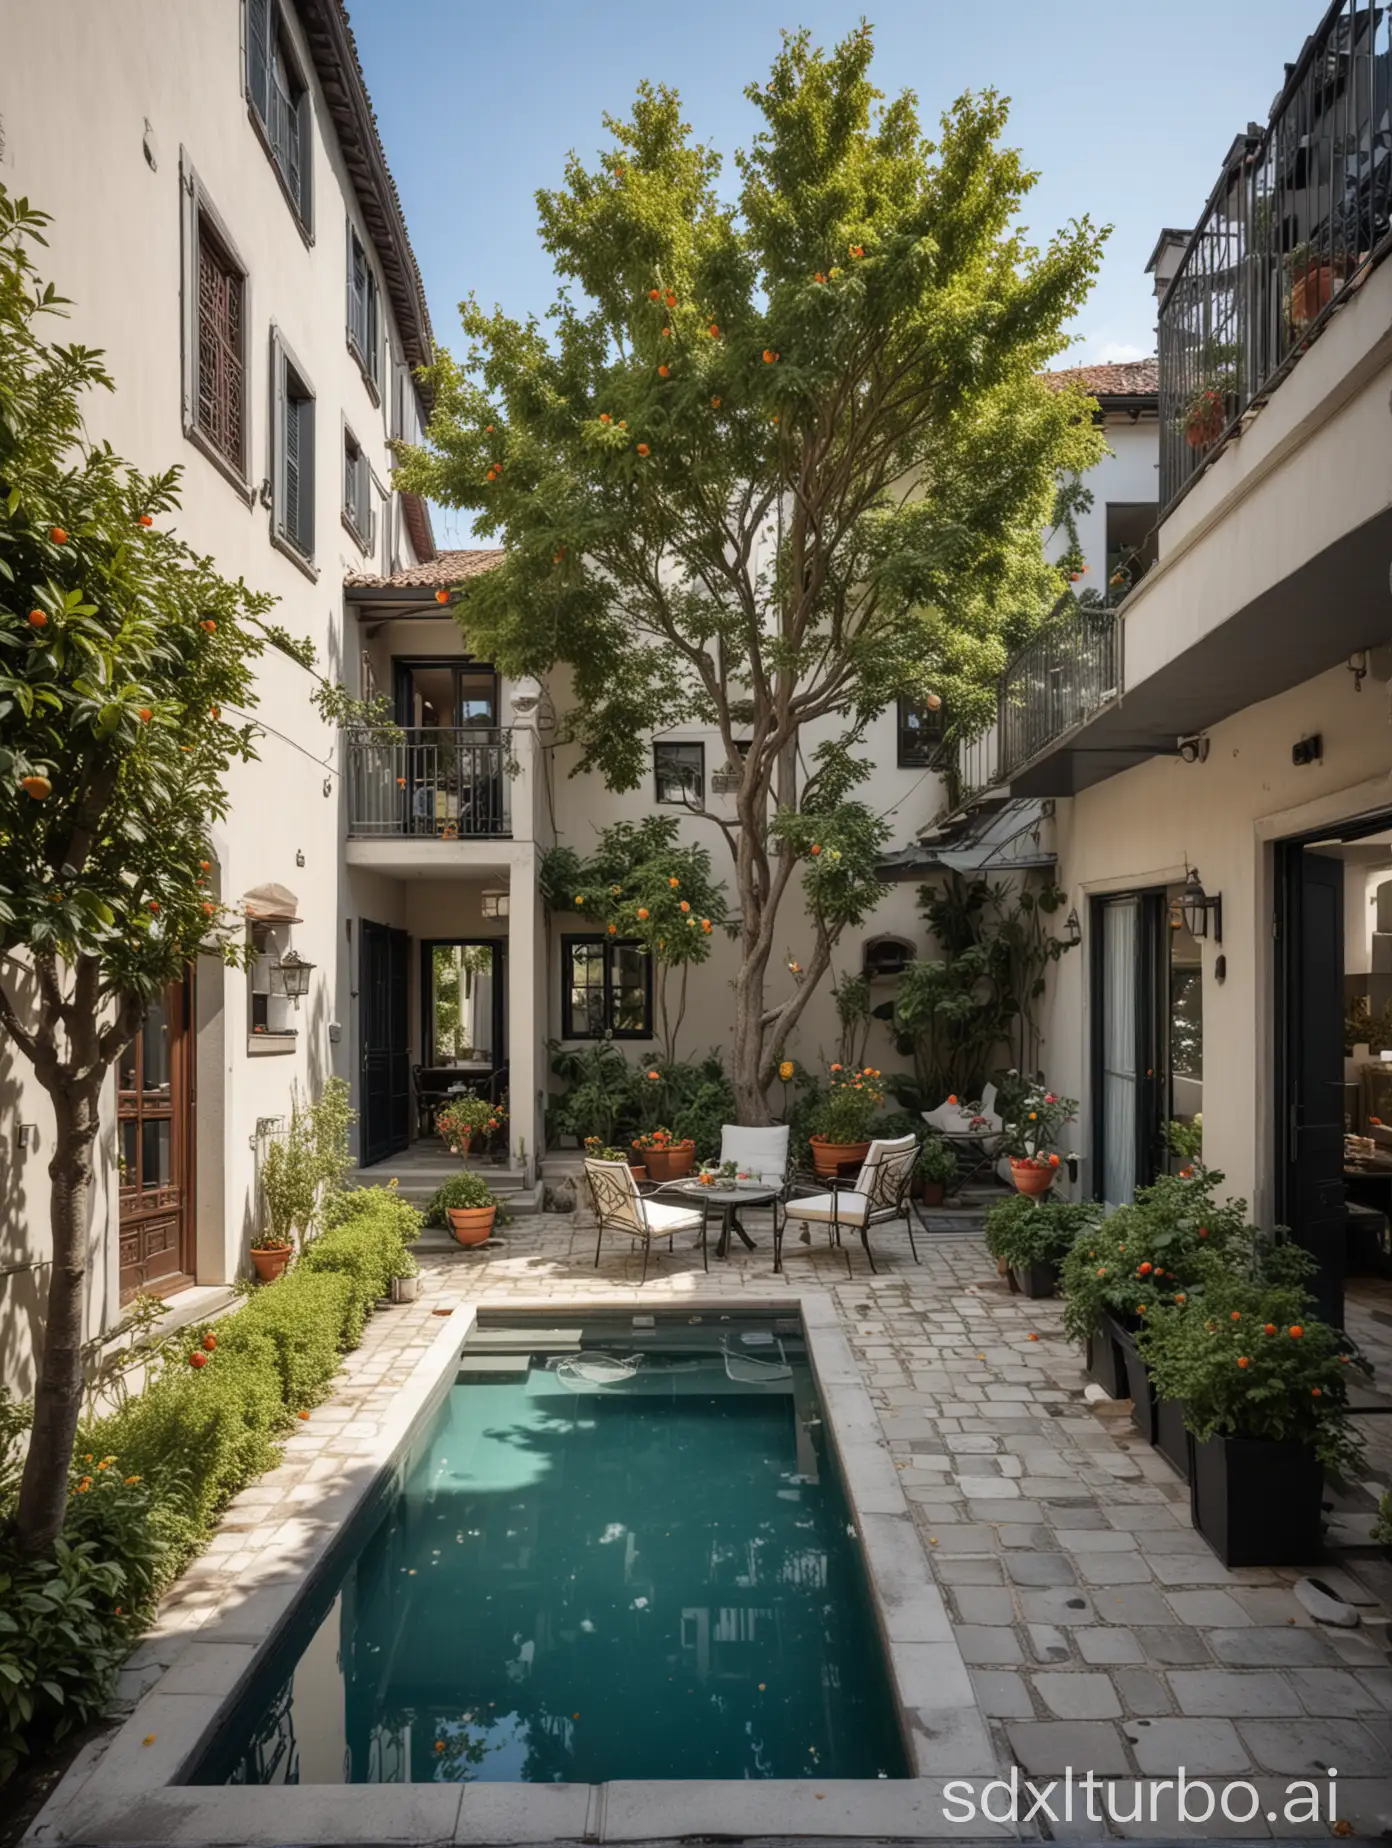 Elegant-TwoStorey-Duplex-with-Courtyard-Pool-and-Lush-Landscape